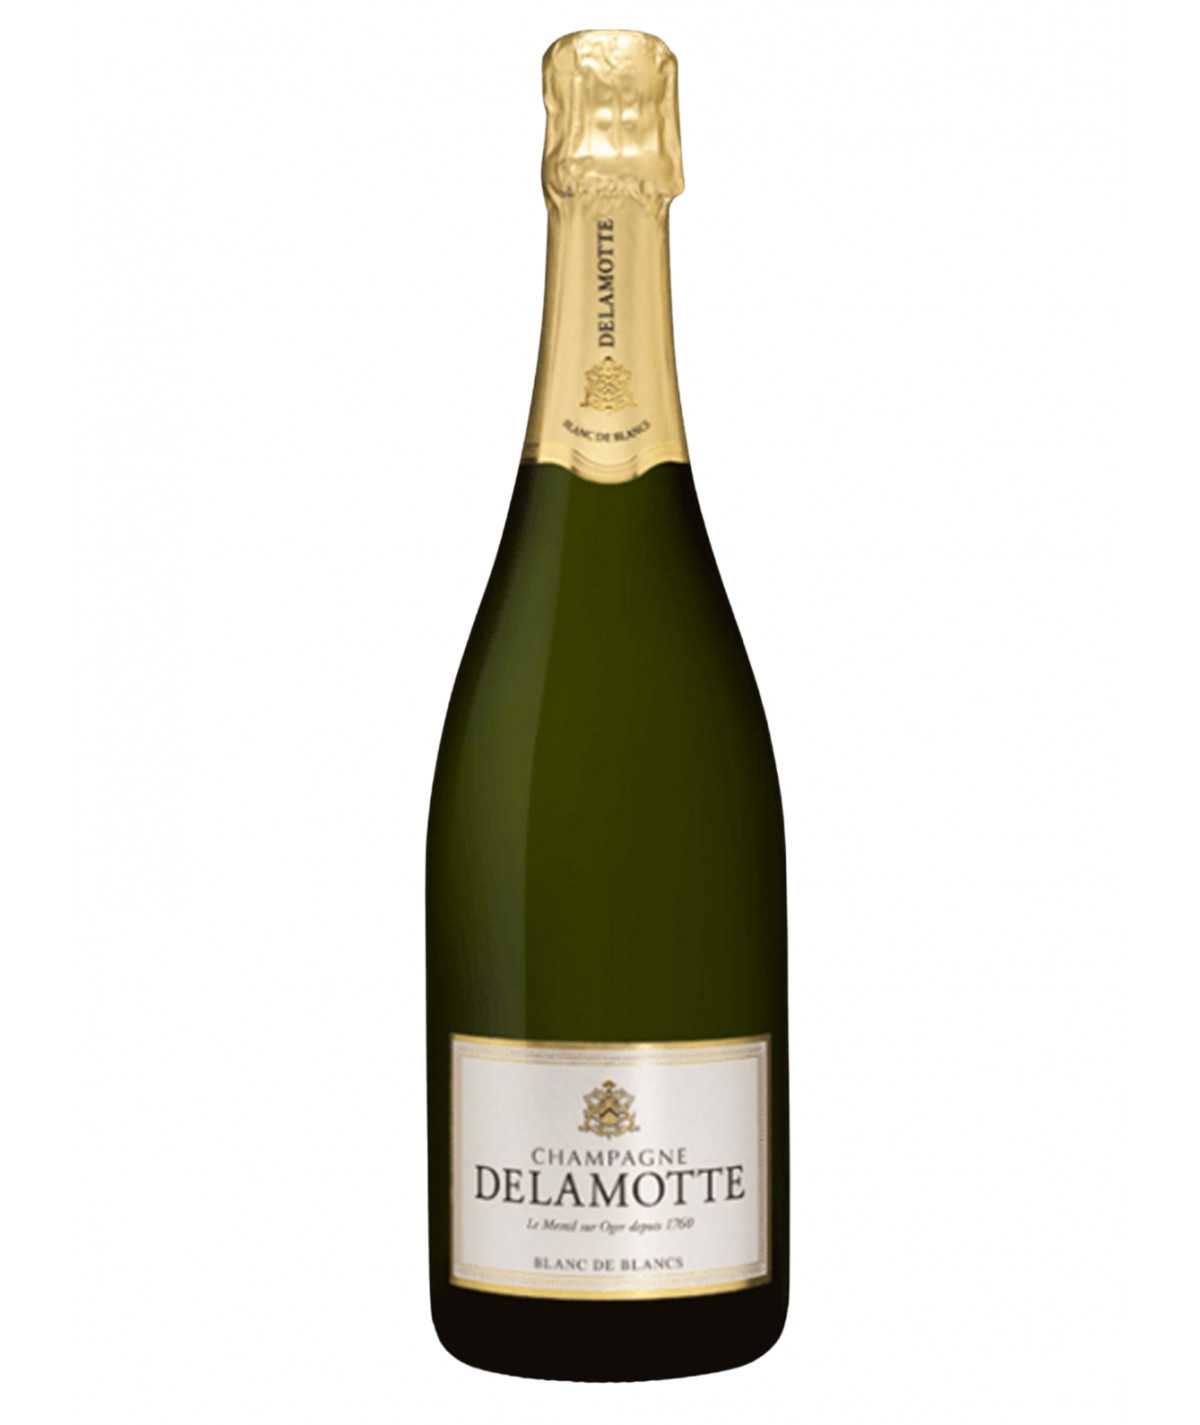 DELAMOTTE Champagne Blanc De Blancs Grand Cru